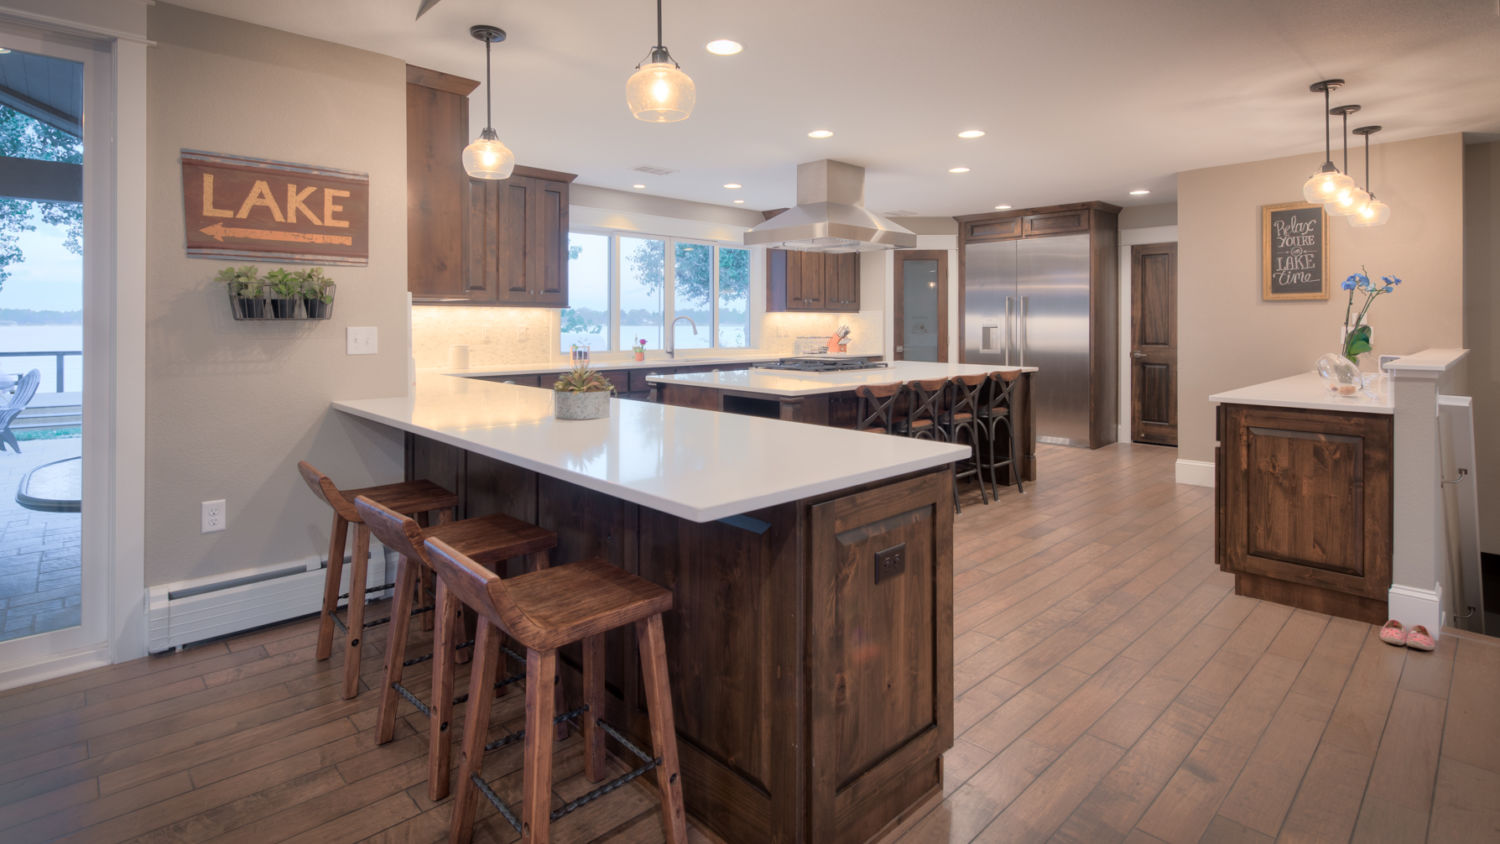 Transitional-kitchen-design-in-custom-home